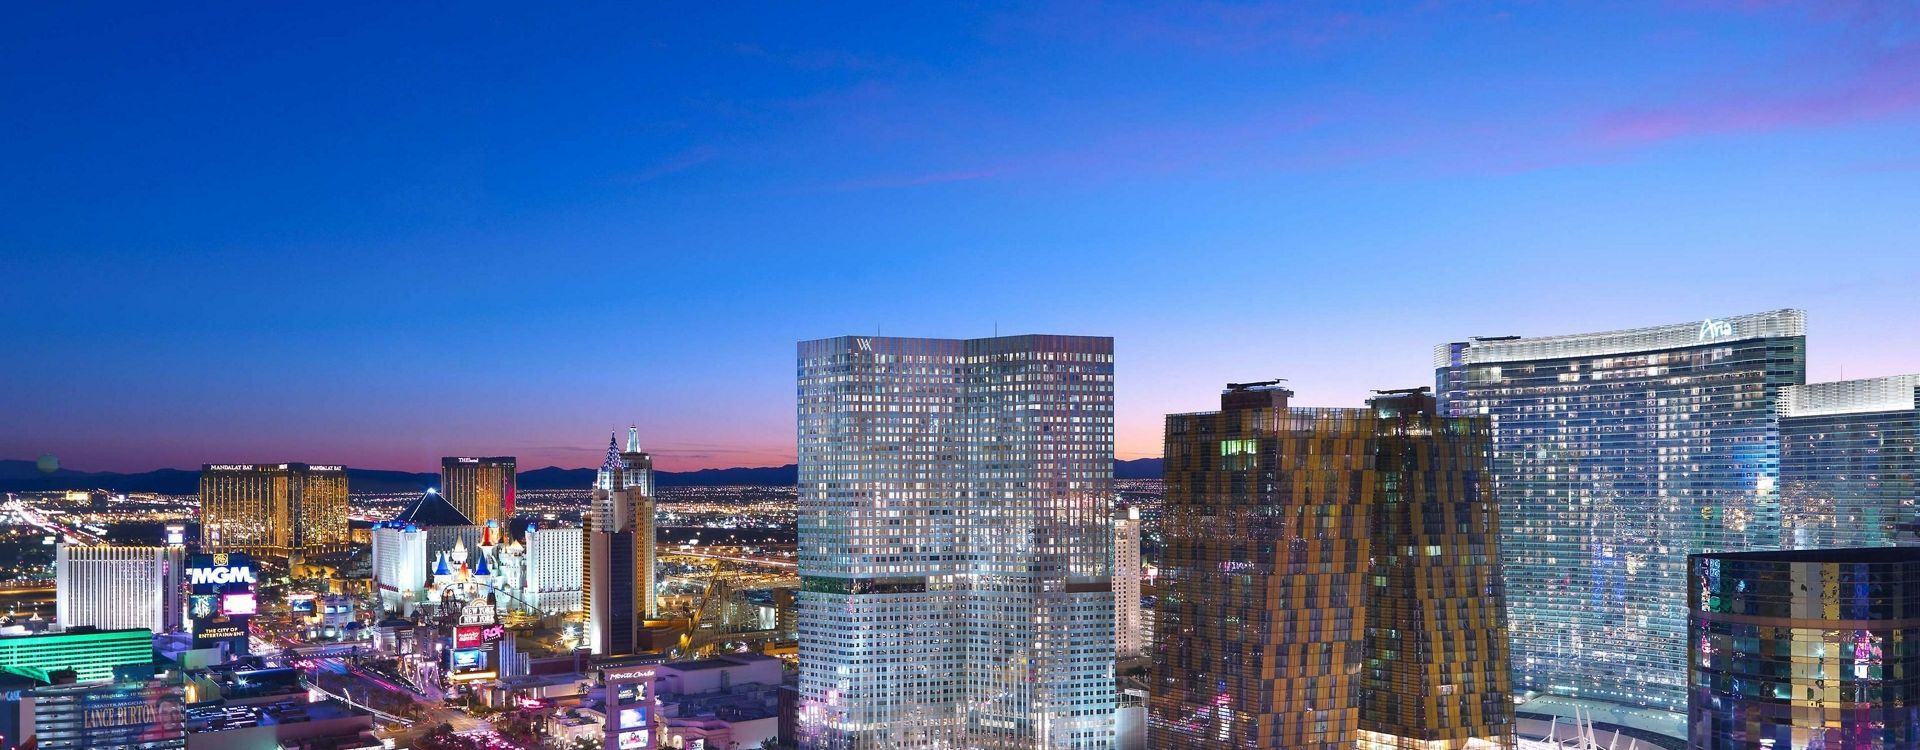 Waldorf Astoria Las Vegas-Location shots.jpg